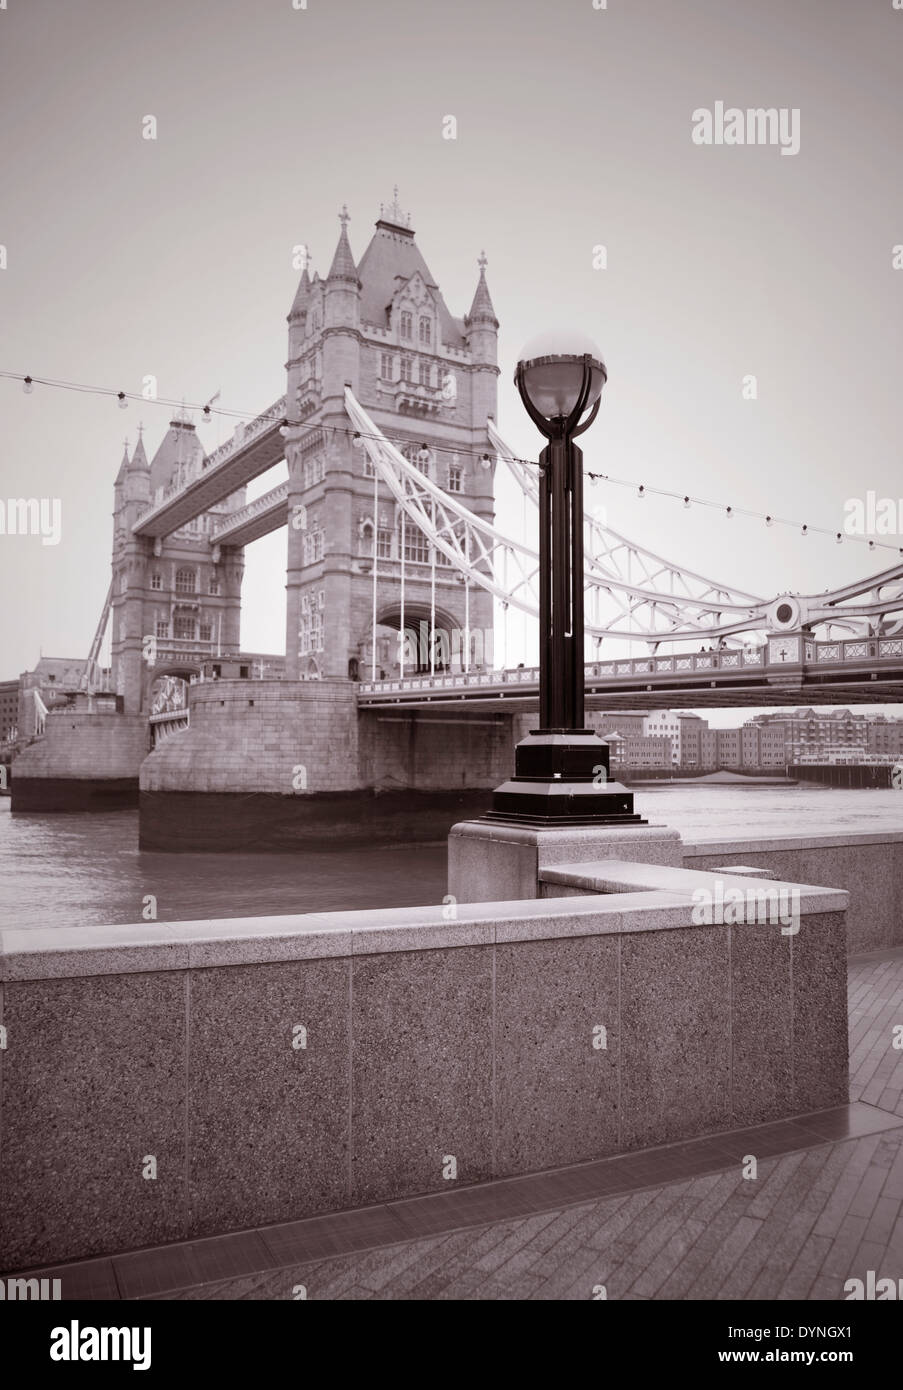 Kunst Bild der Tower Bridge, London, UK. Stockfoto